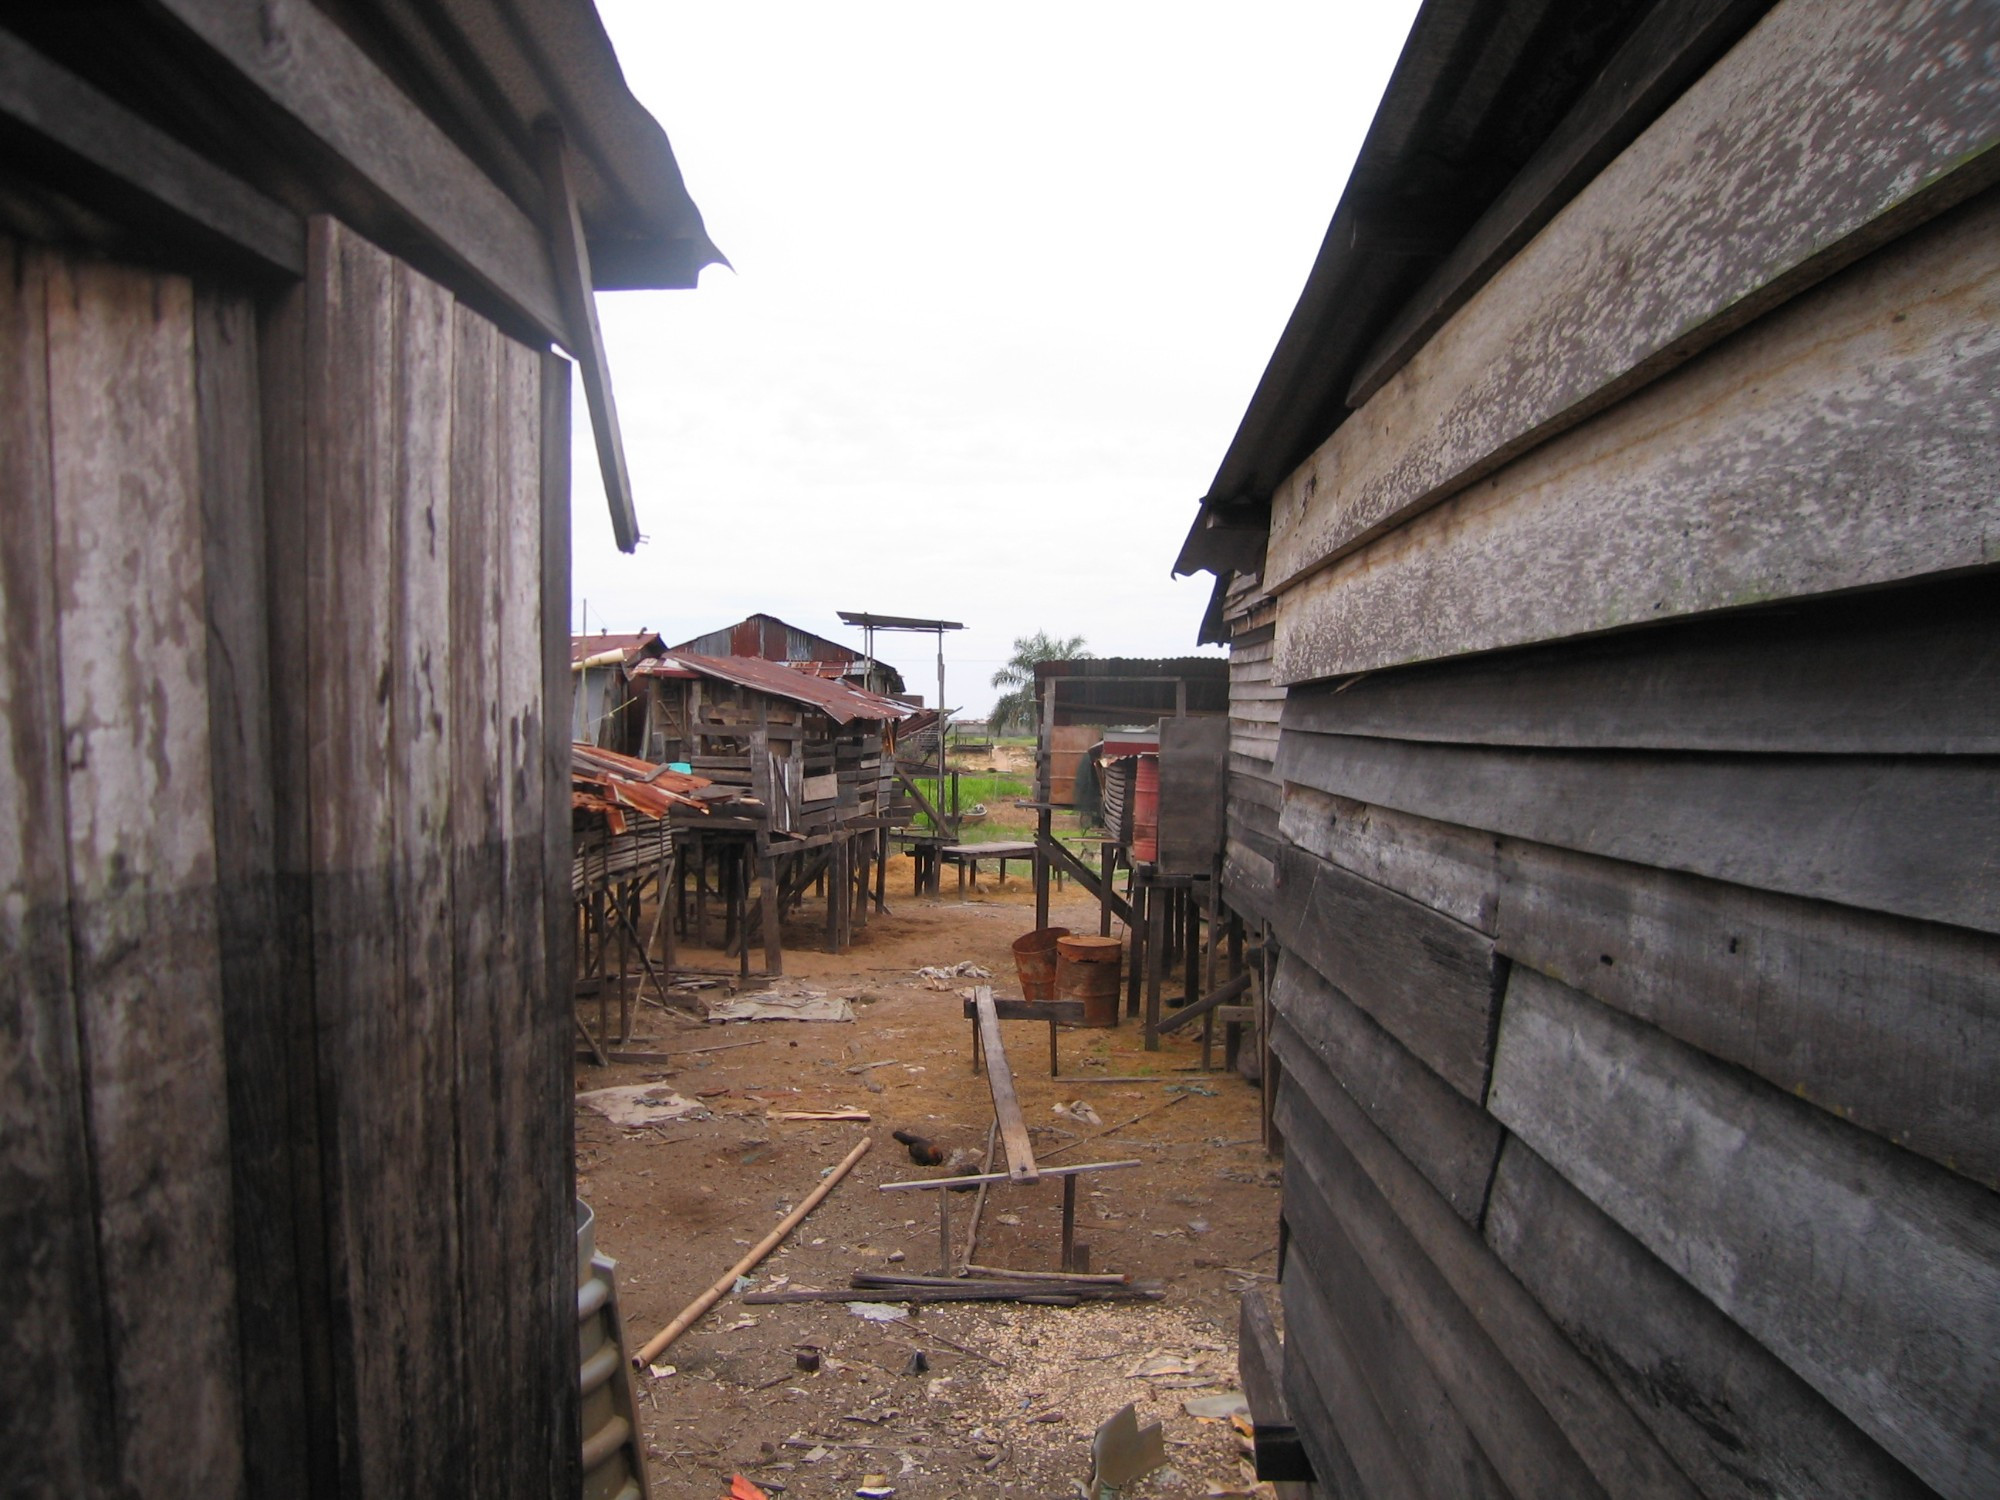 Indigenous Longhouse, Малайзия